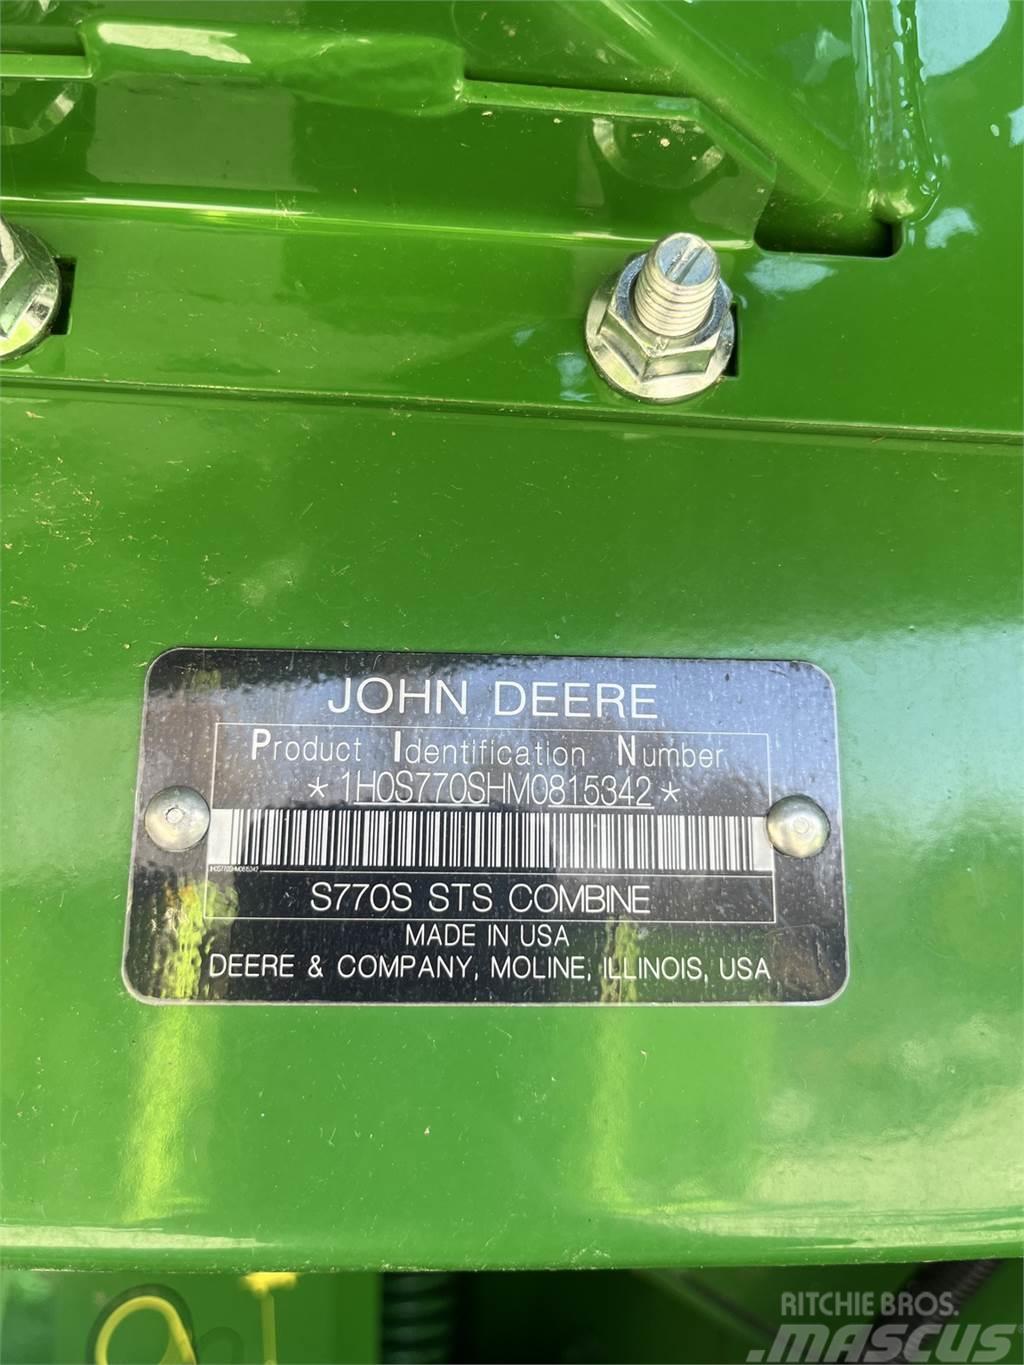 John Deere S770 Θεριζοαλωνιστικές μηχανές